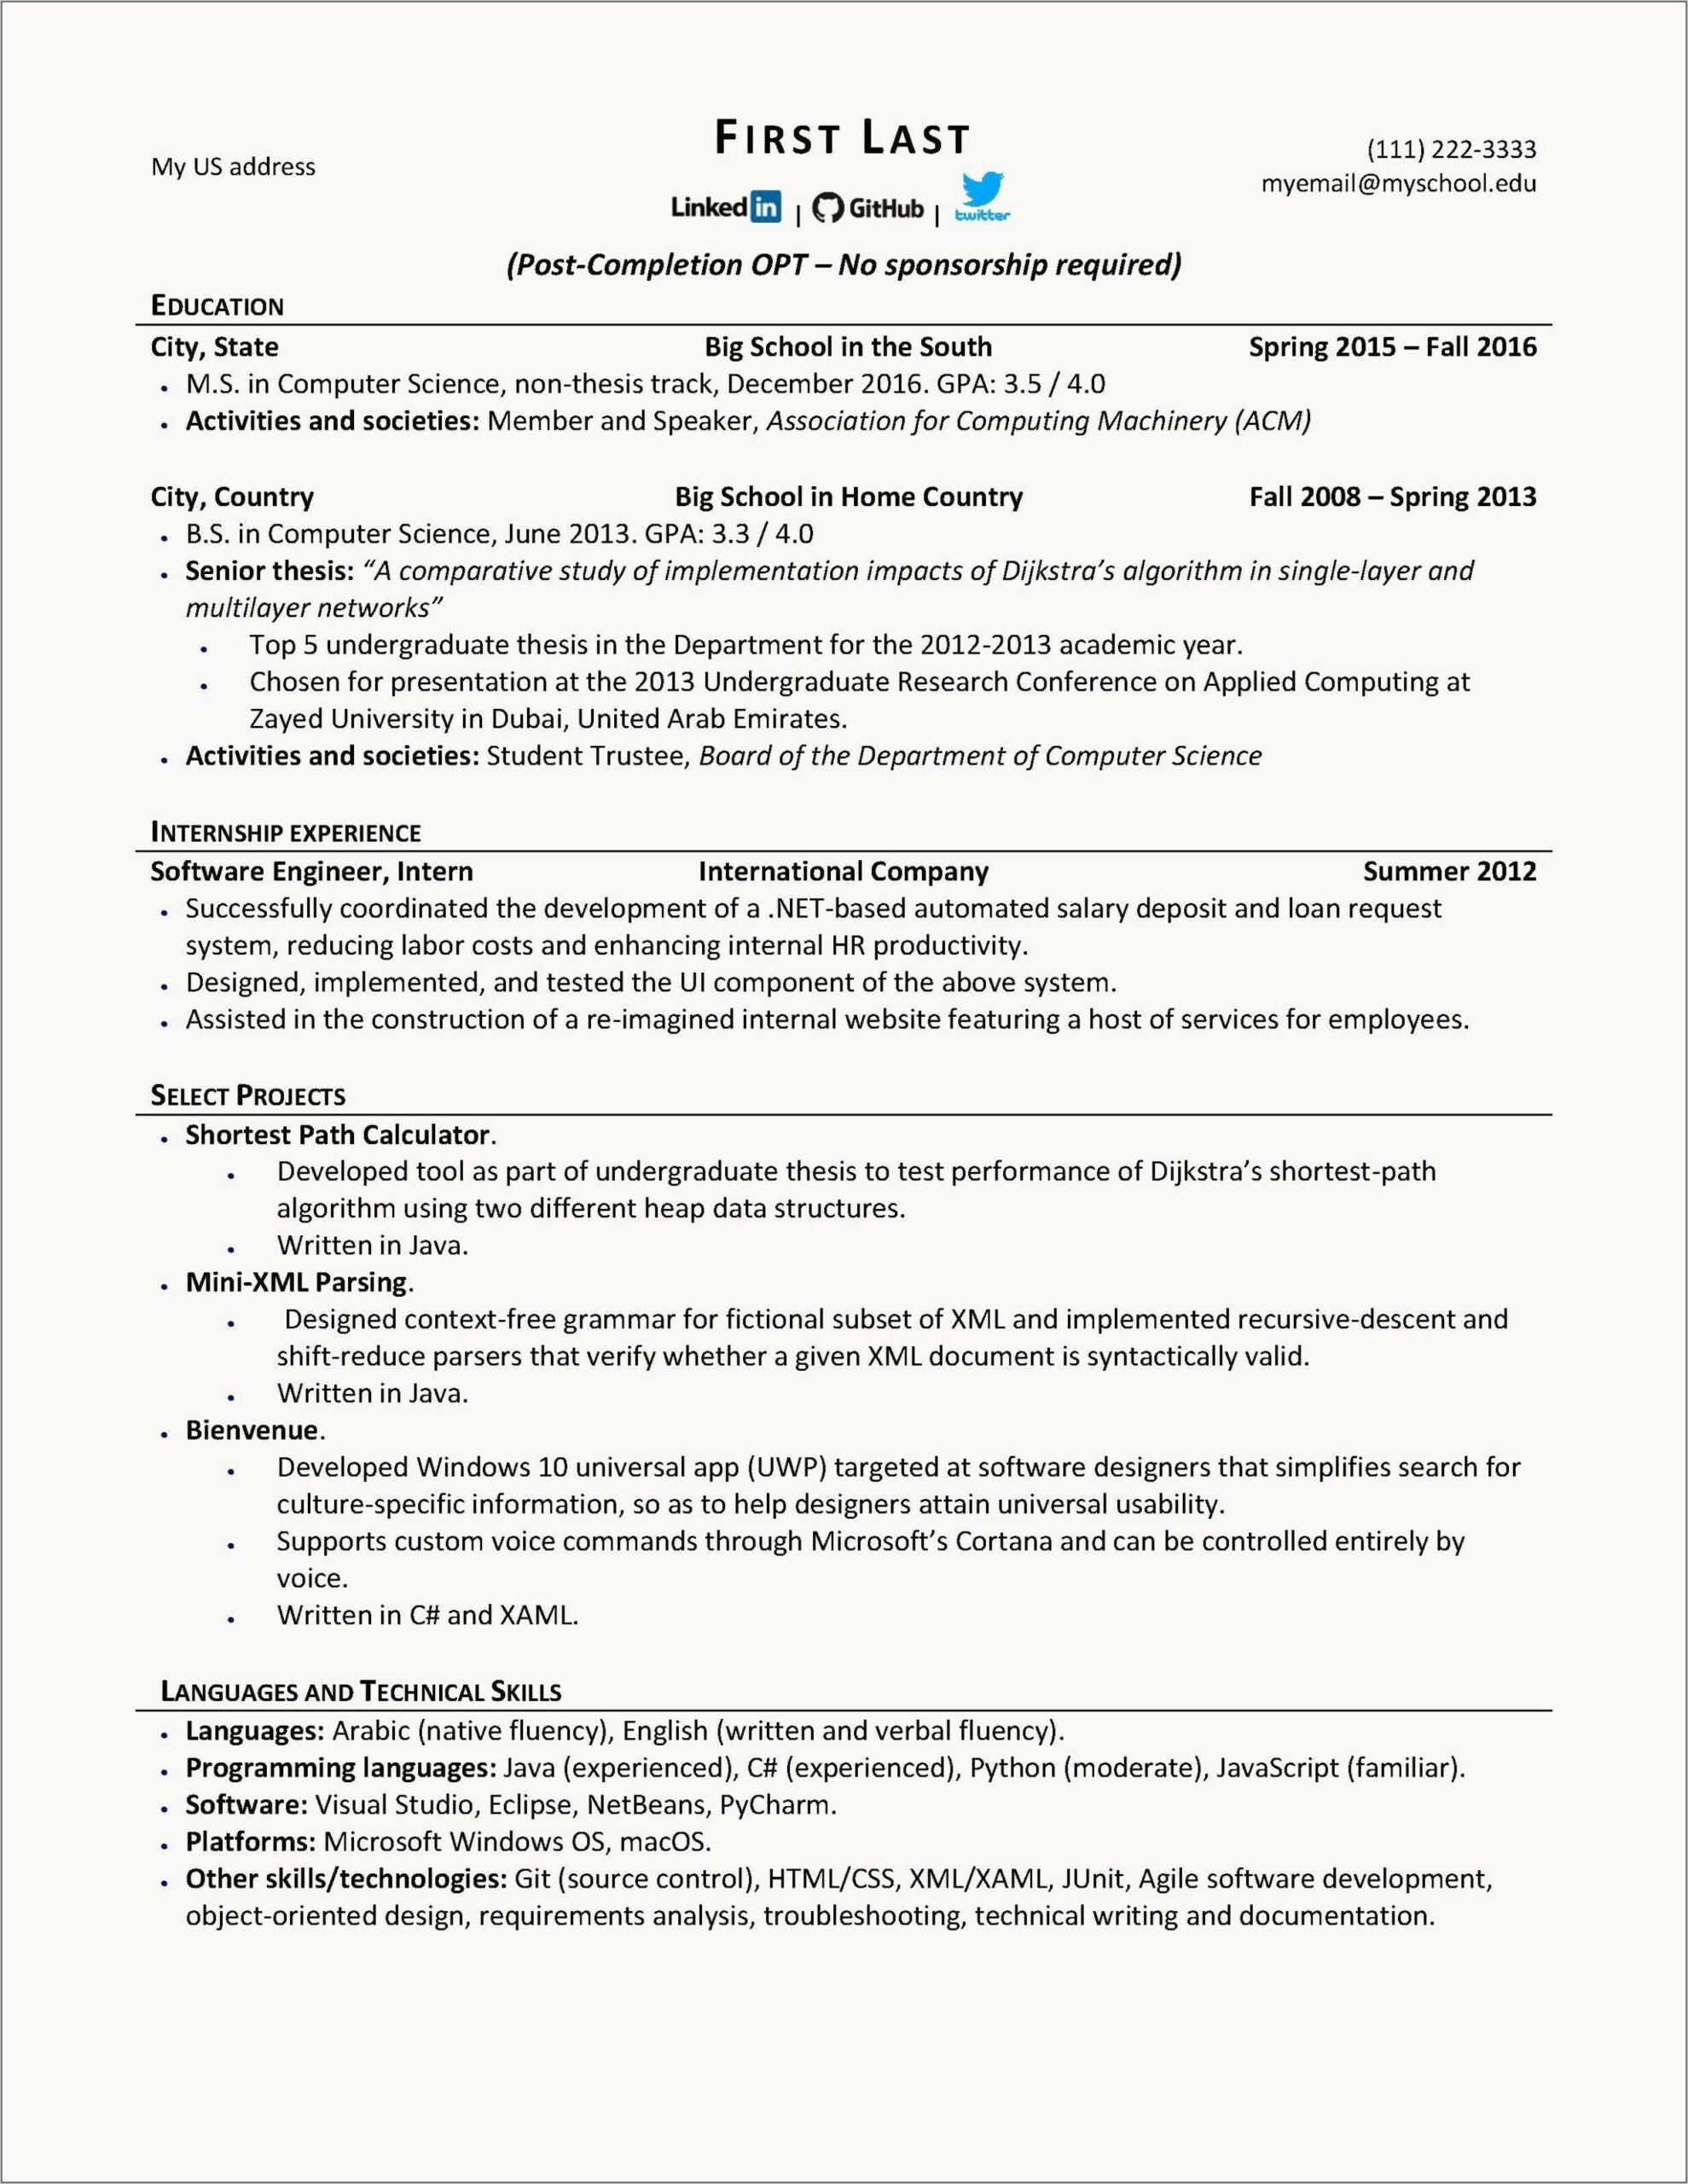 Best Resume Layout For Scientists Reddit